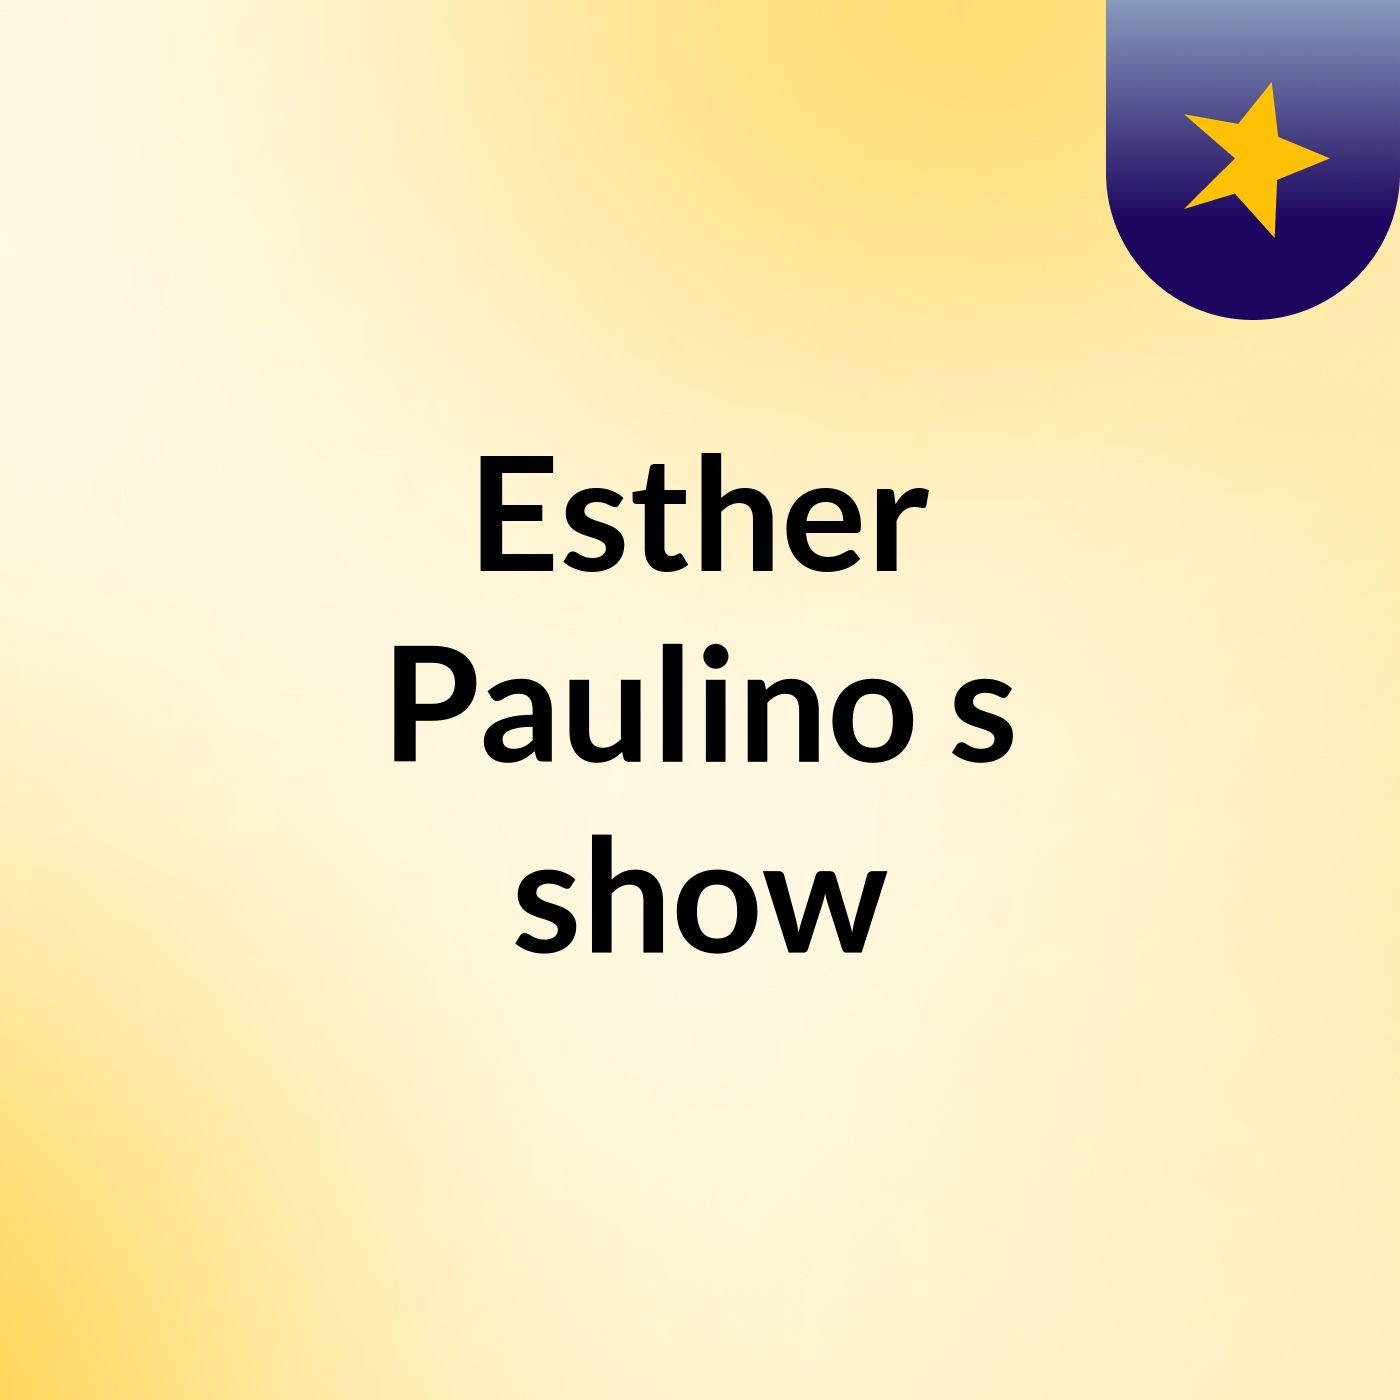 Esther Paulino's show